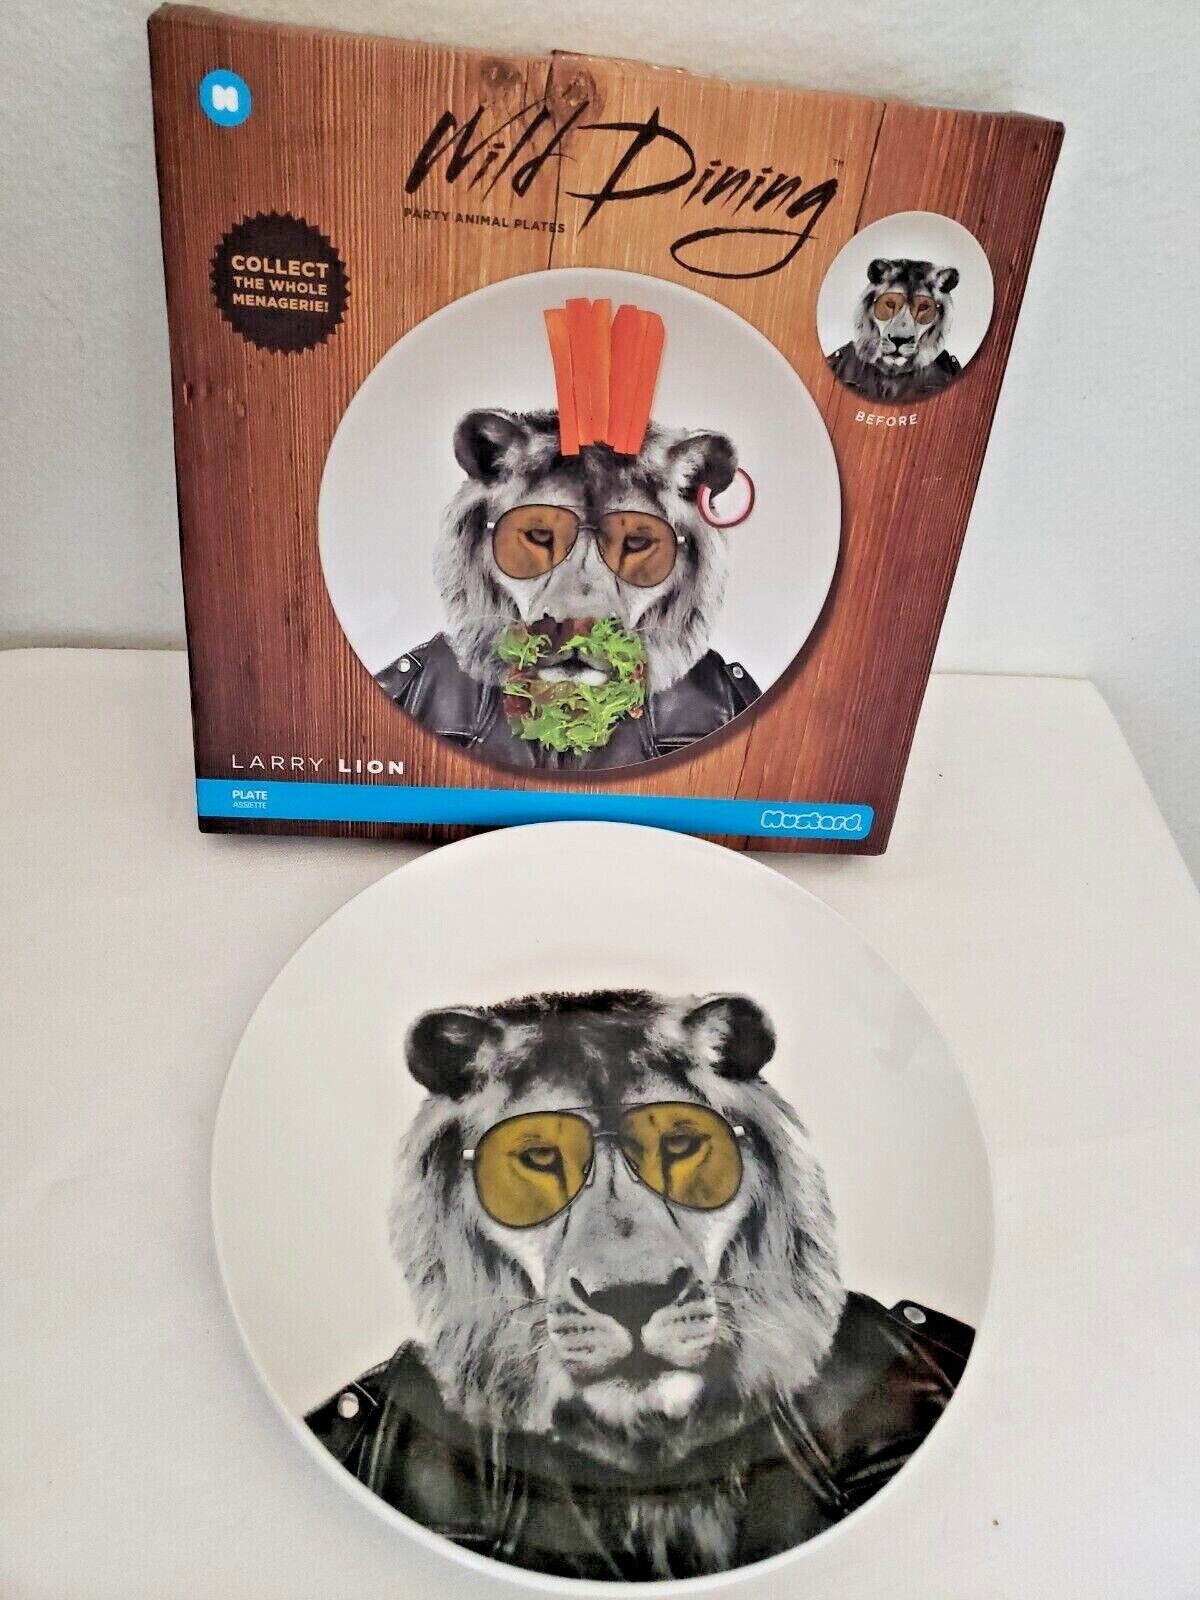 Mustard Wild Dining Ceramic Larry Lion Dinner Party Animal Plate Biker Funny  - $22.75